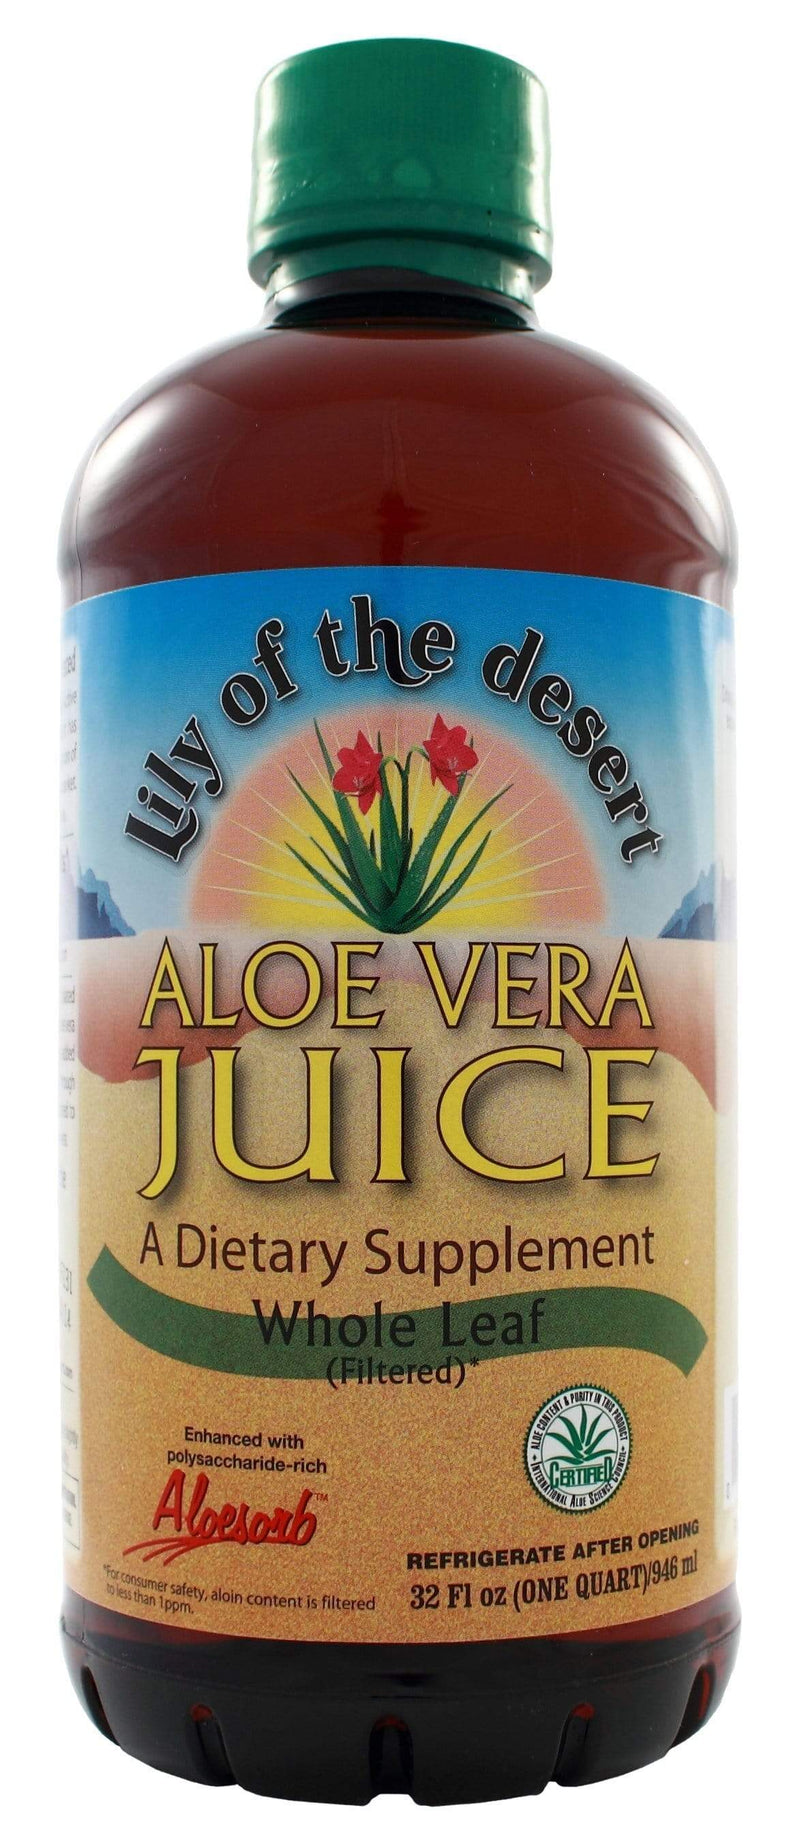 Lily of the Desert Whole Leaf Aloe Vera Juice